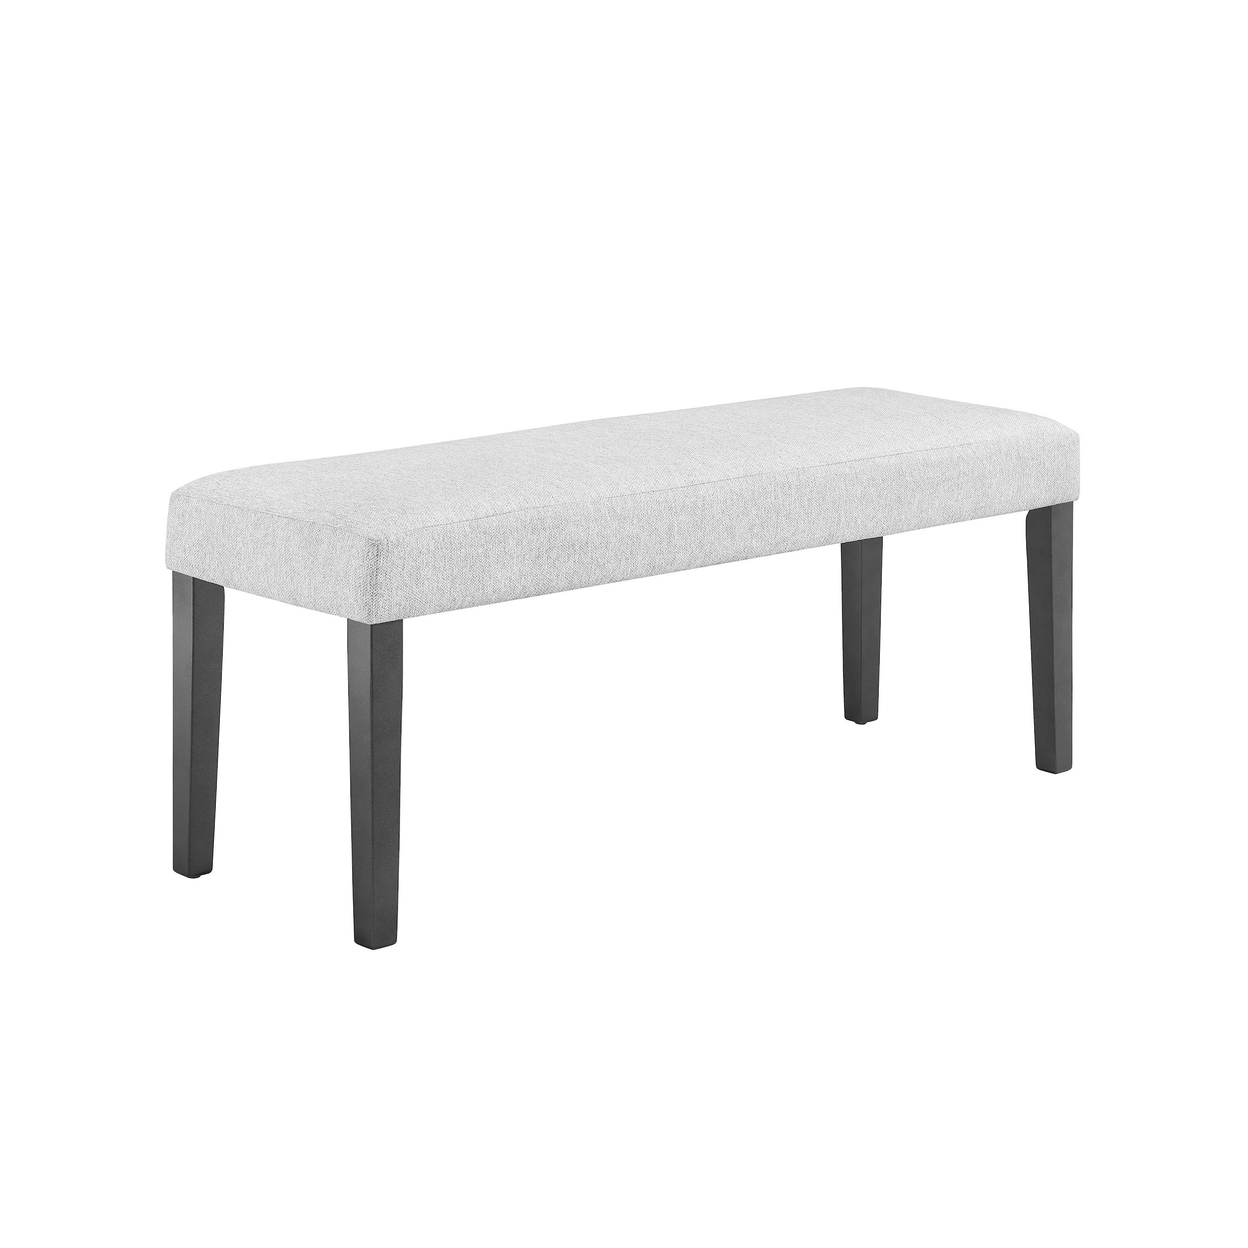 Brandon 46 Inch Bench, Wood Frame, Soft Cushion, White Fabric Upholstery -Saltoro Sherpi